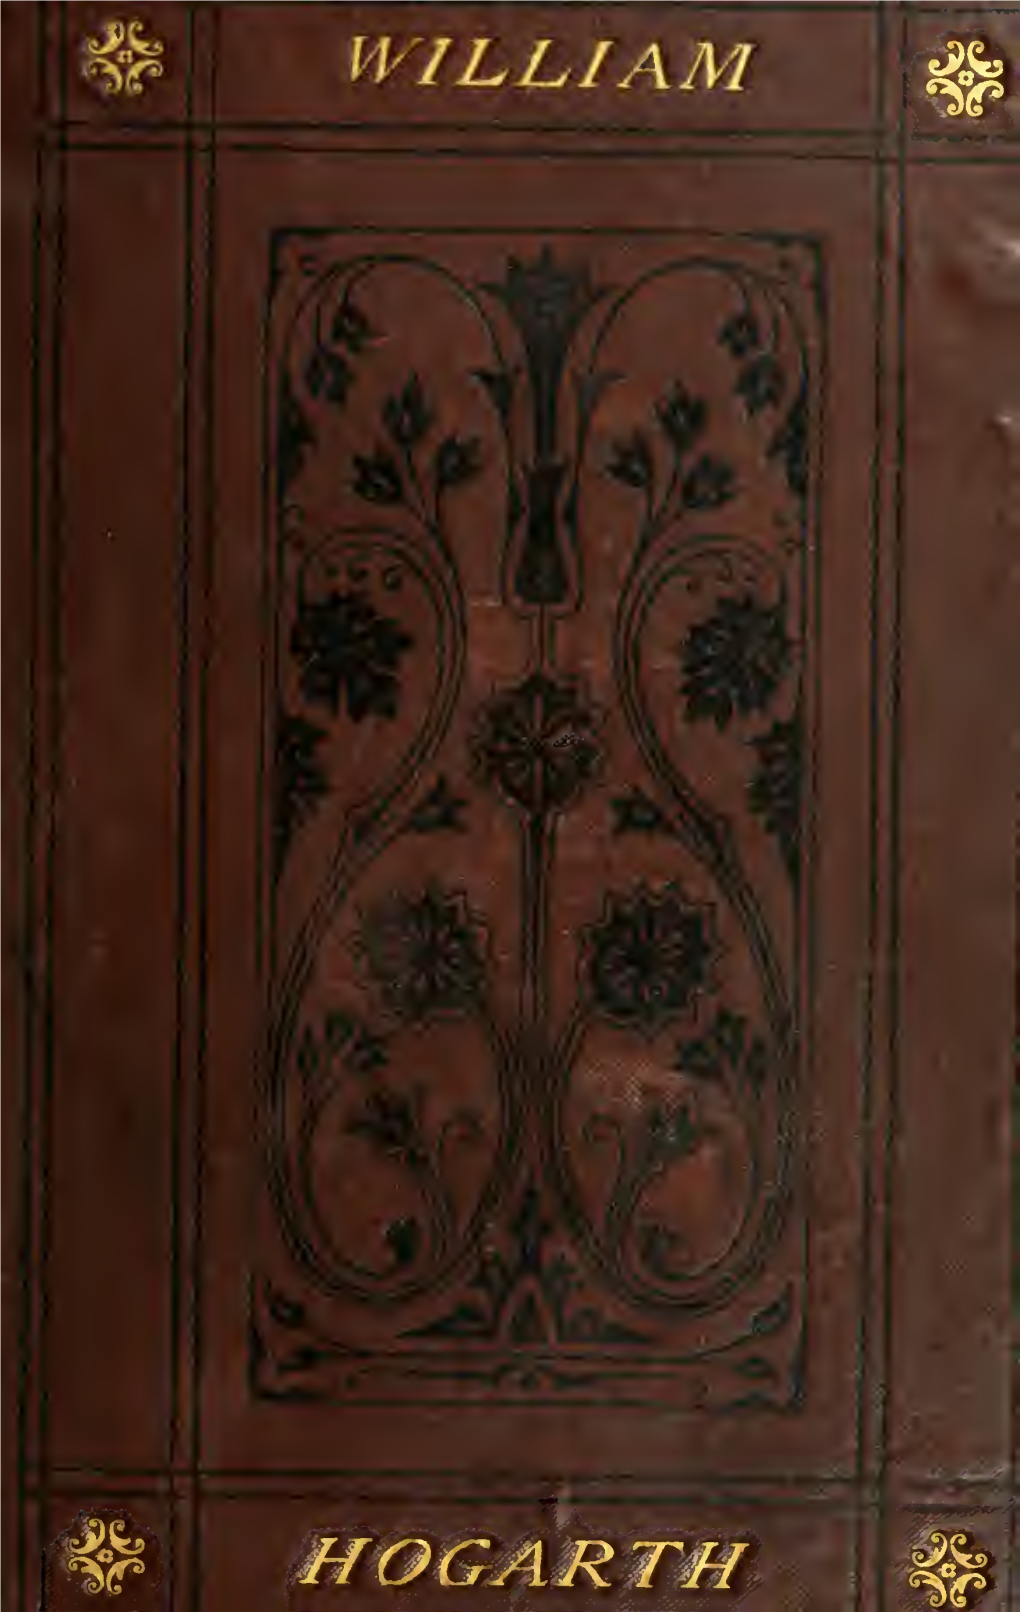 William Hogarth: Painter, Engraver, and Philosopher. Essays on The